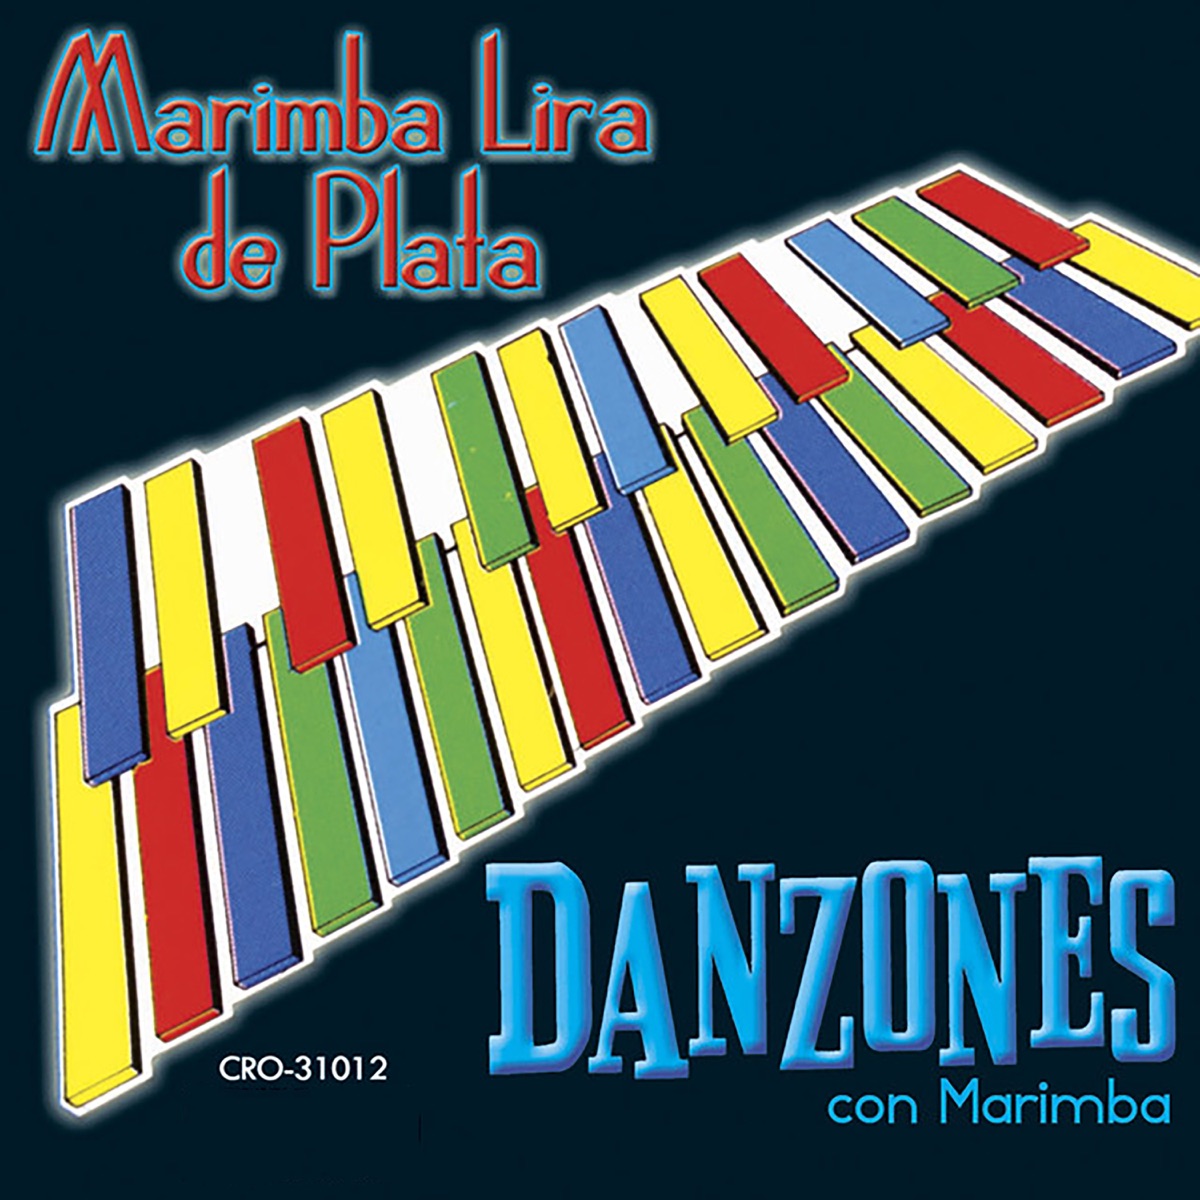 Danzones Con Marimba, Vol. 2 by Marimba Lira De Plata on Apple Music